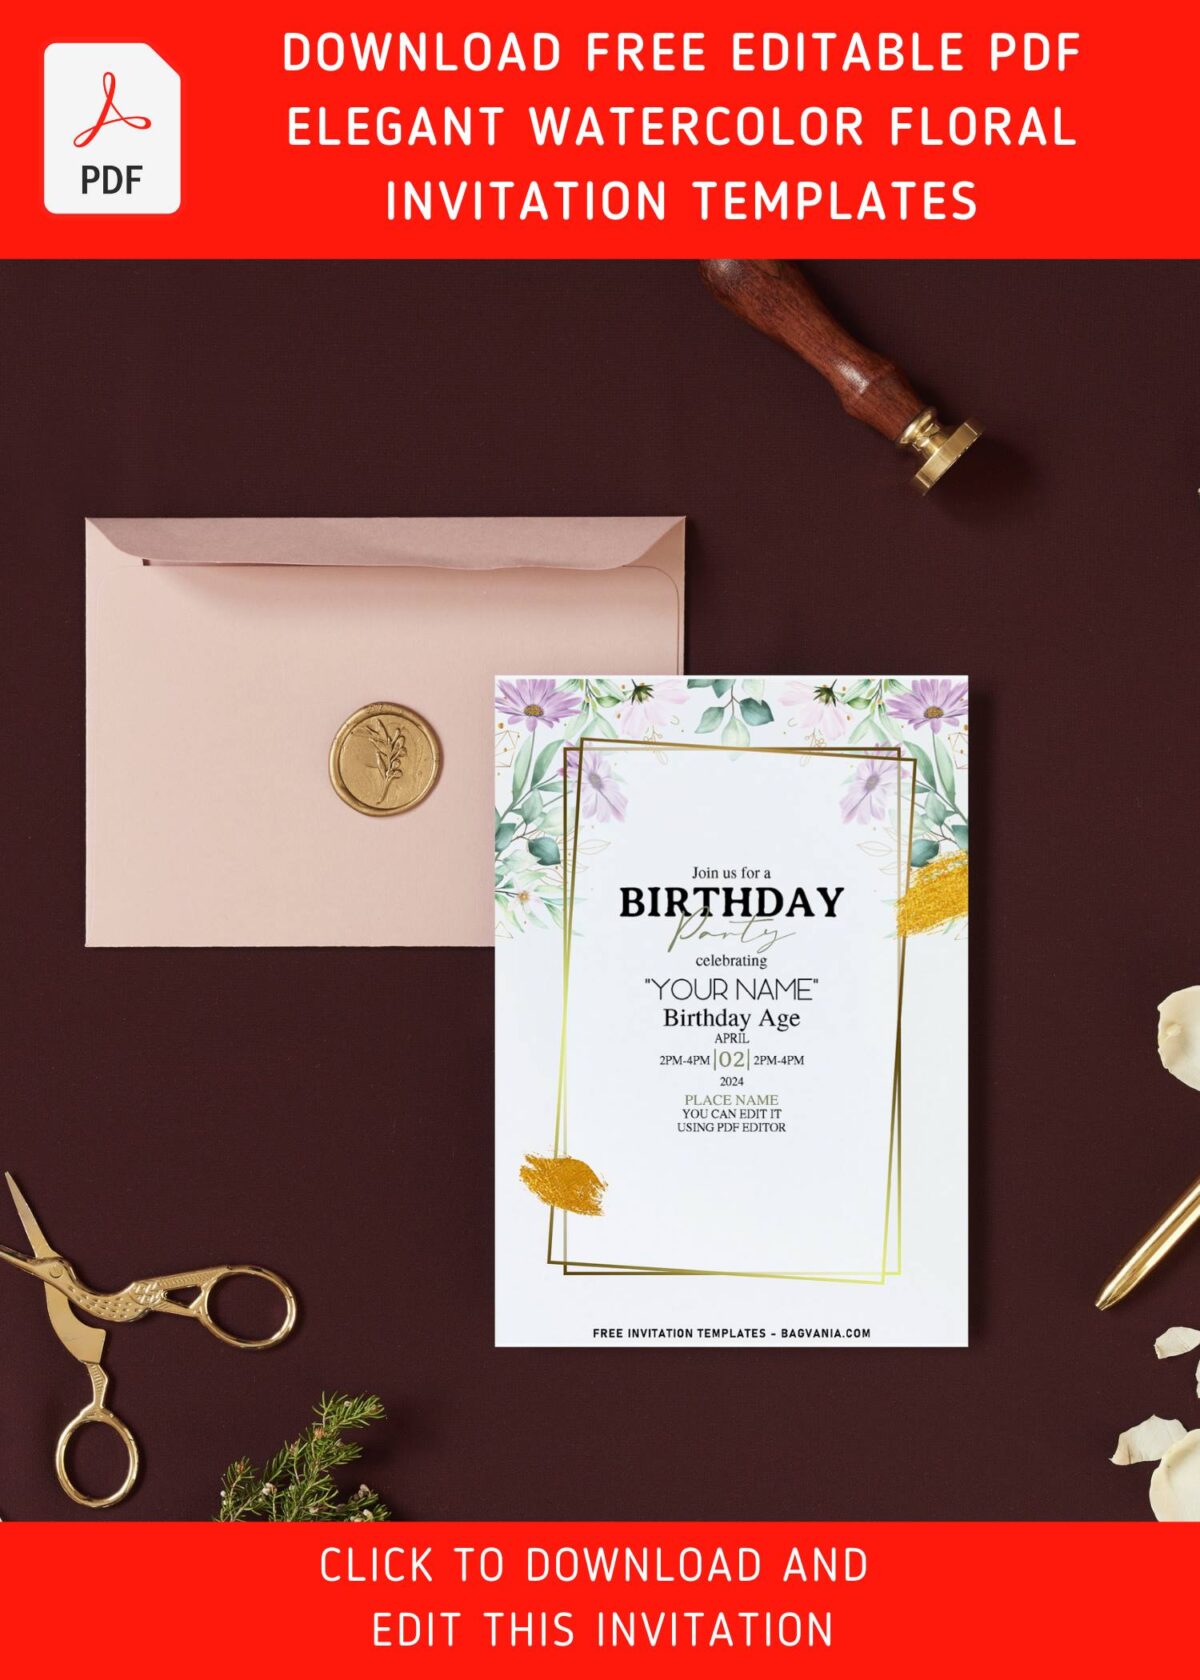 (Free Editable PDF) Spring Romance Birthday Invitation Templates with white daisy